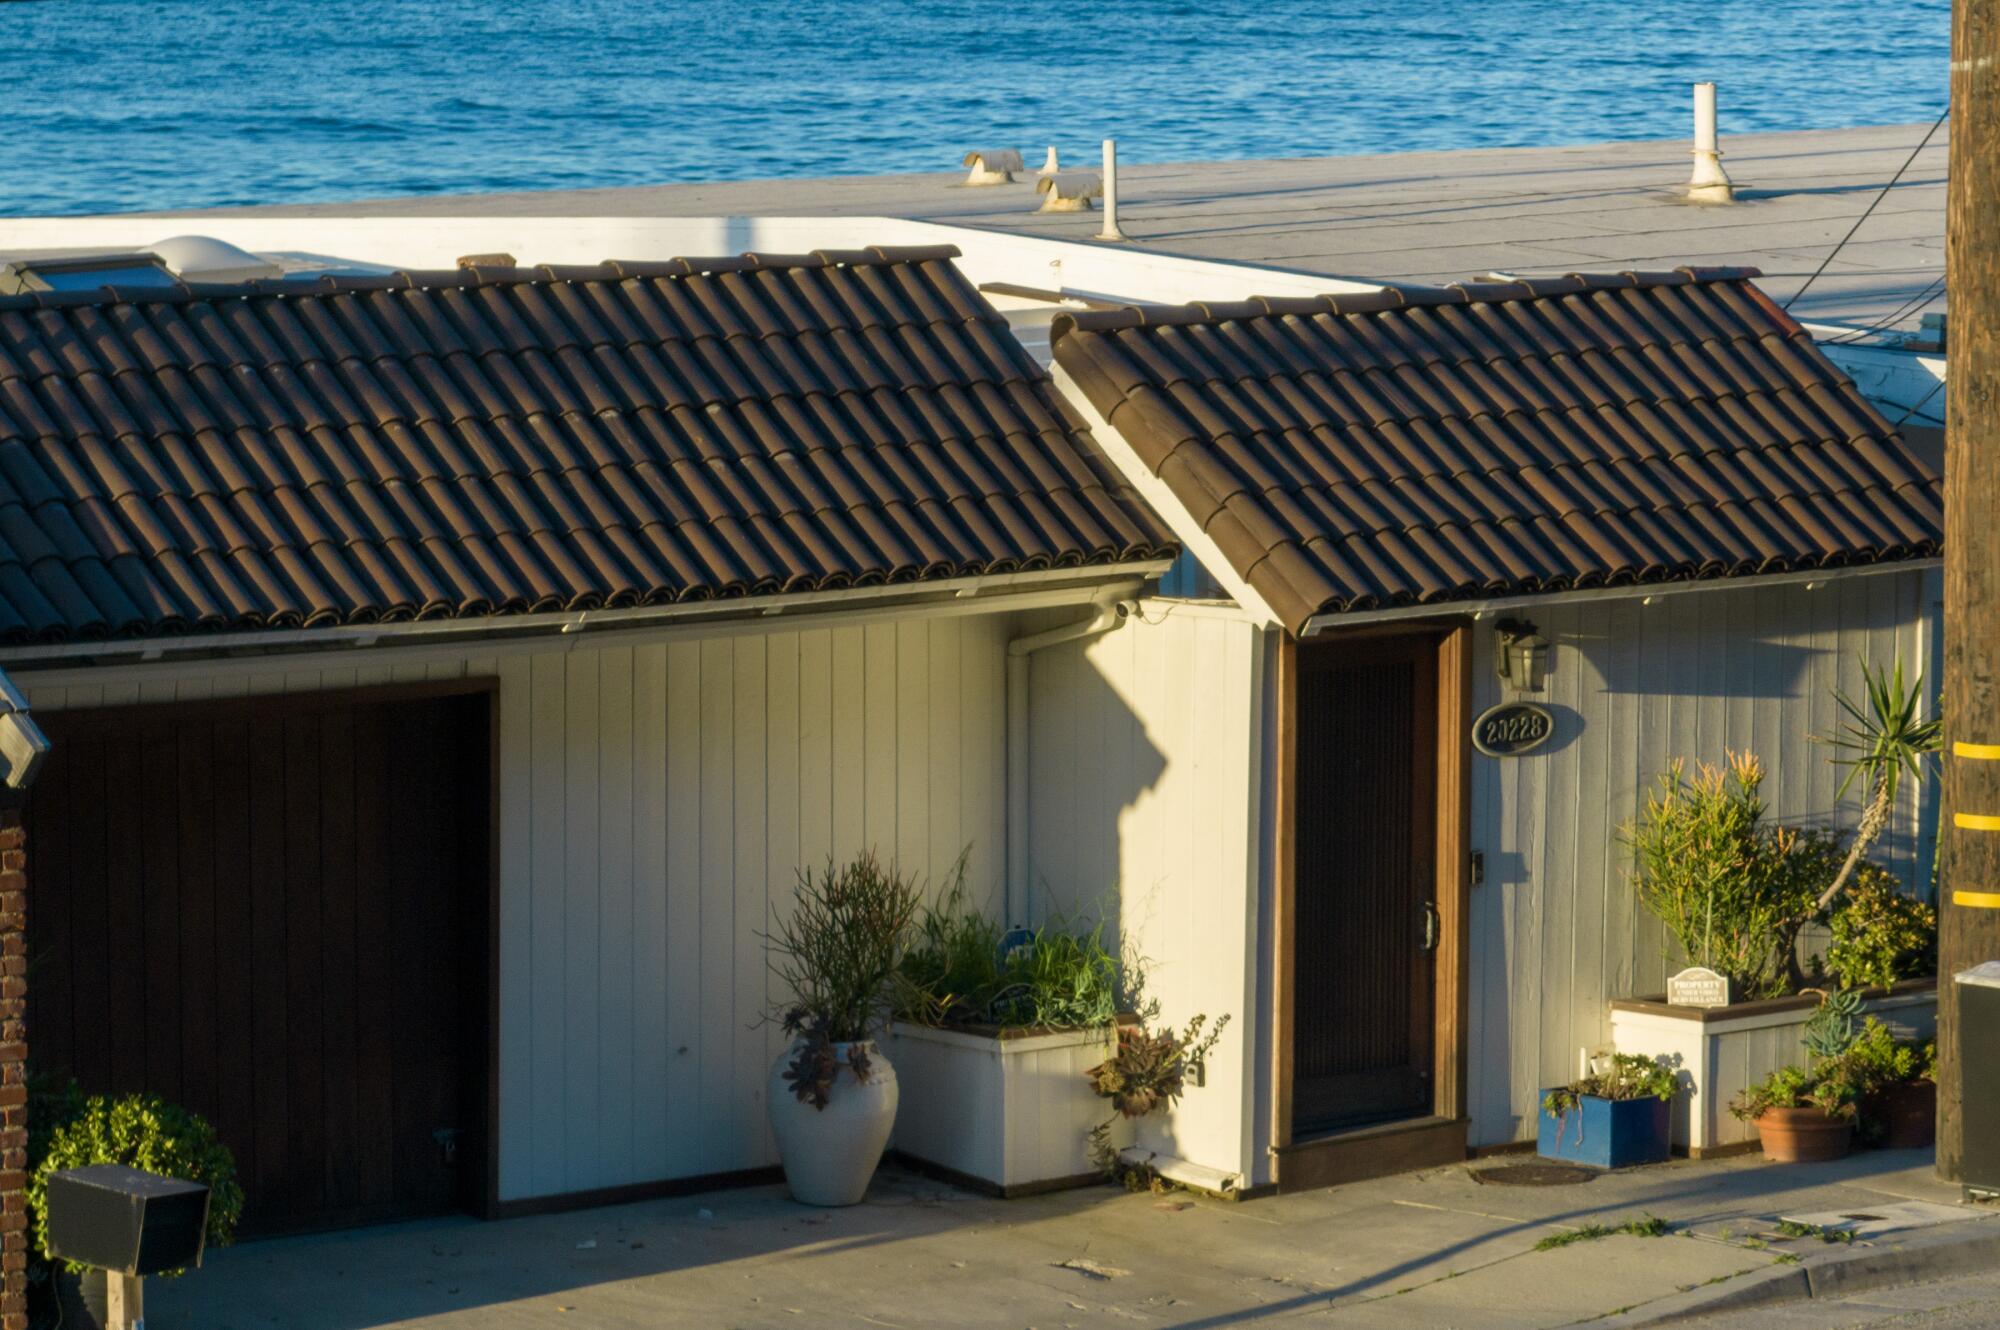 The entrance to Mark Sawusch's beachfront home in Malibu.